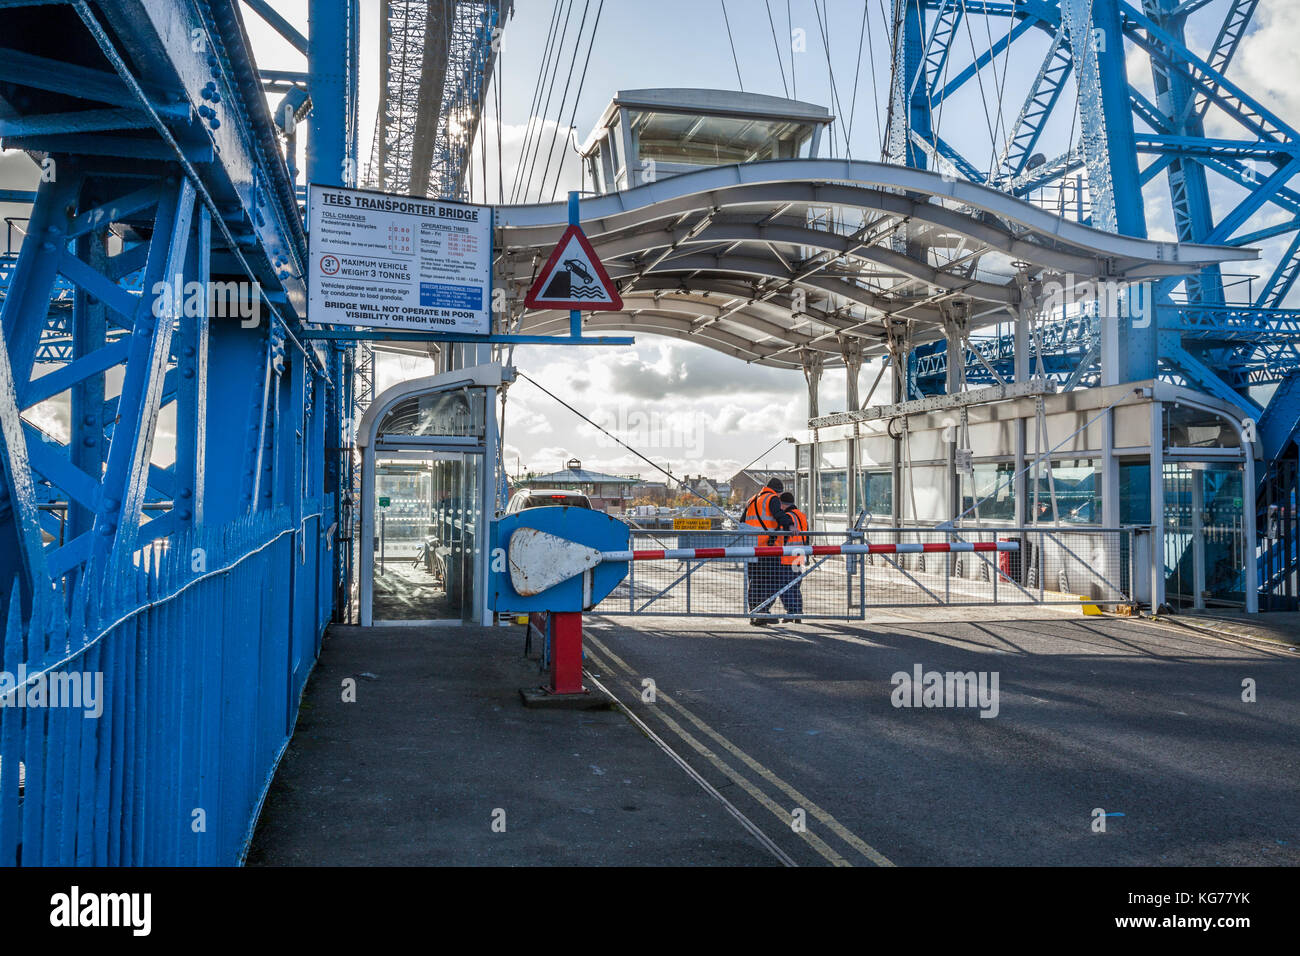 The operators closing the gates on the Transporter Bridge,Middlesbrough,England,UK Stock Photo